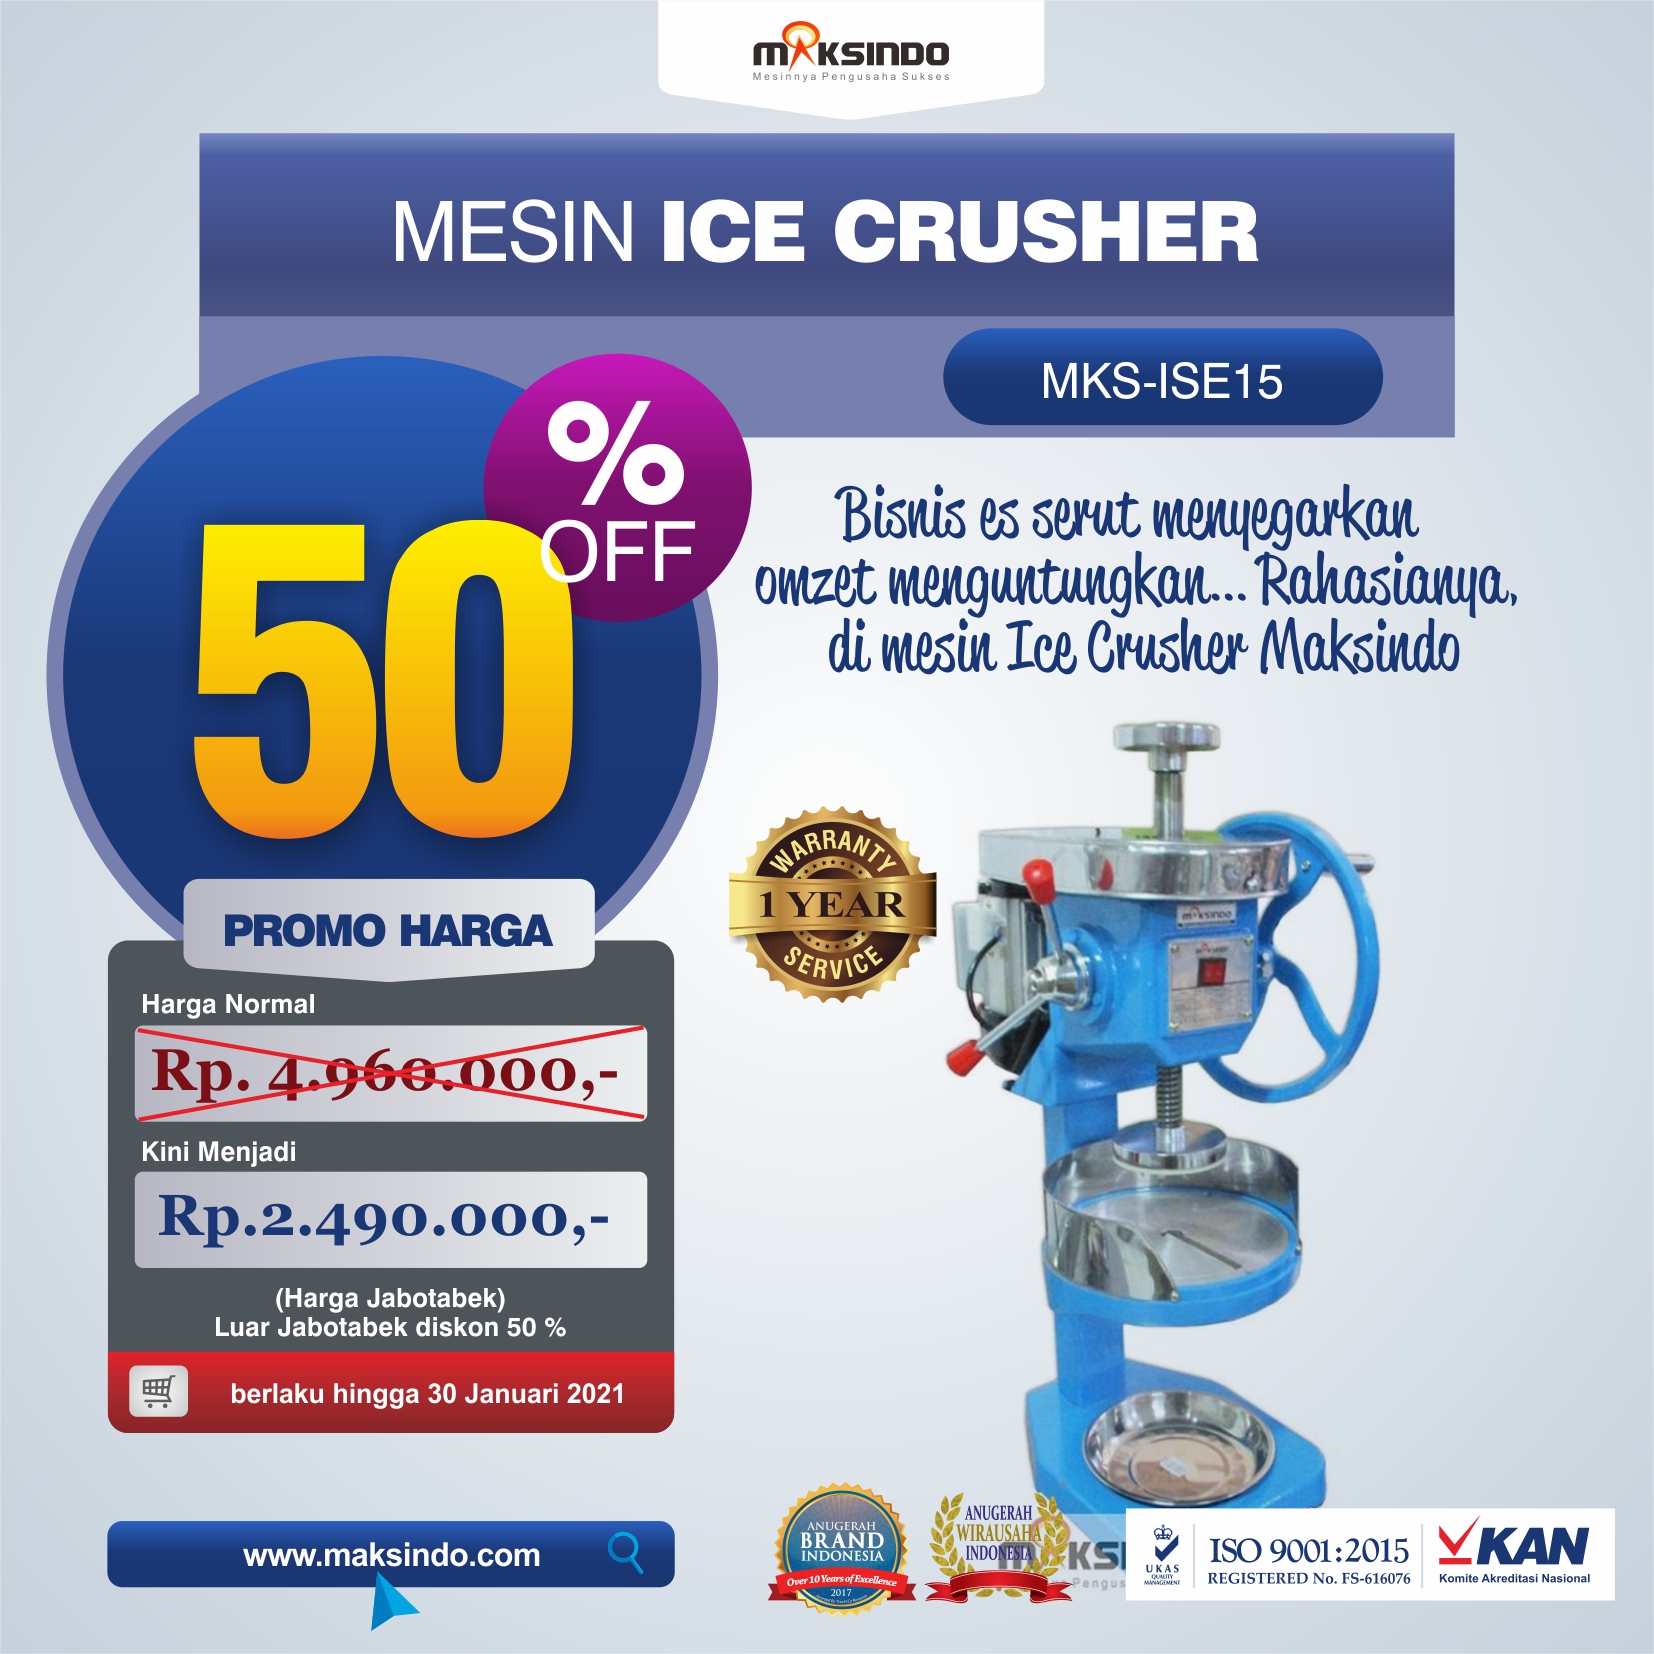 Jual Mesin Ice Crusher MKS-ISE15 di Yogyakarta